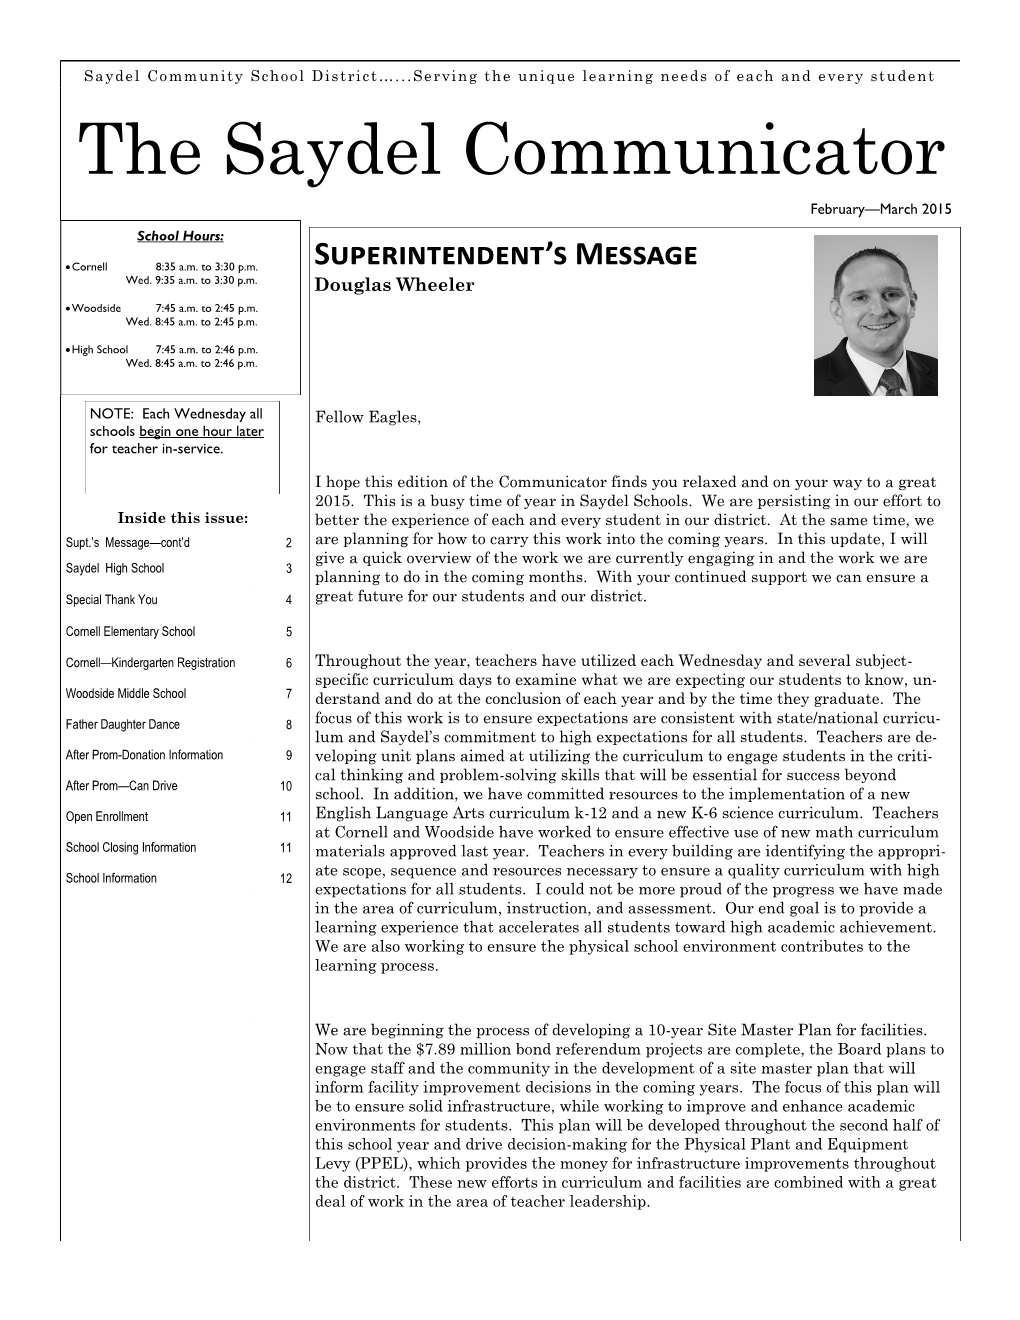 The Saydel Communicator February—March 2015 School Hours